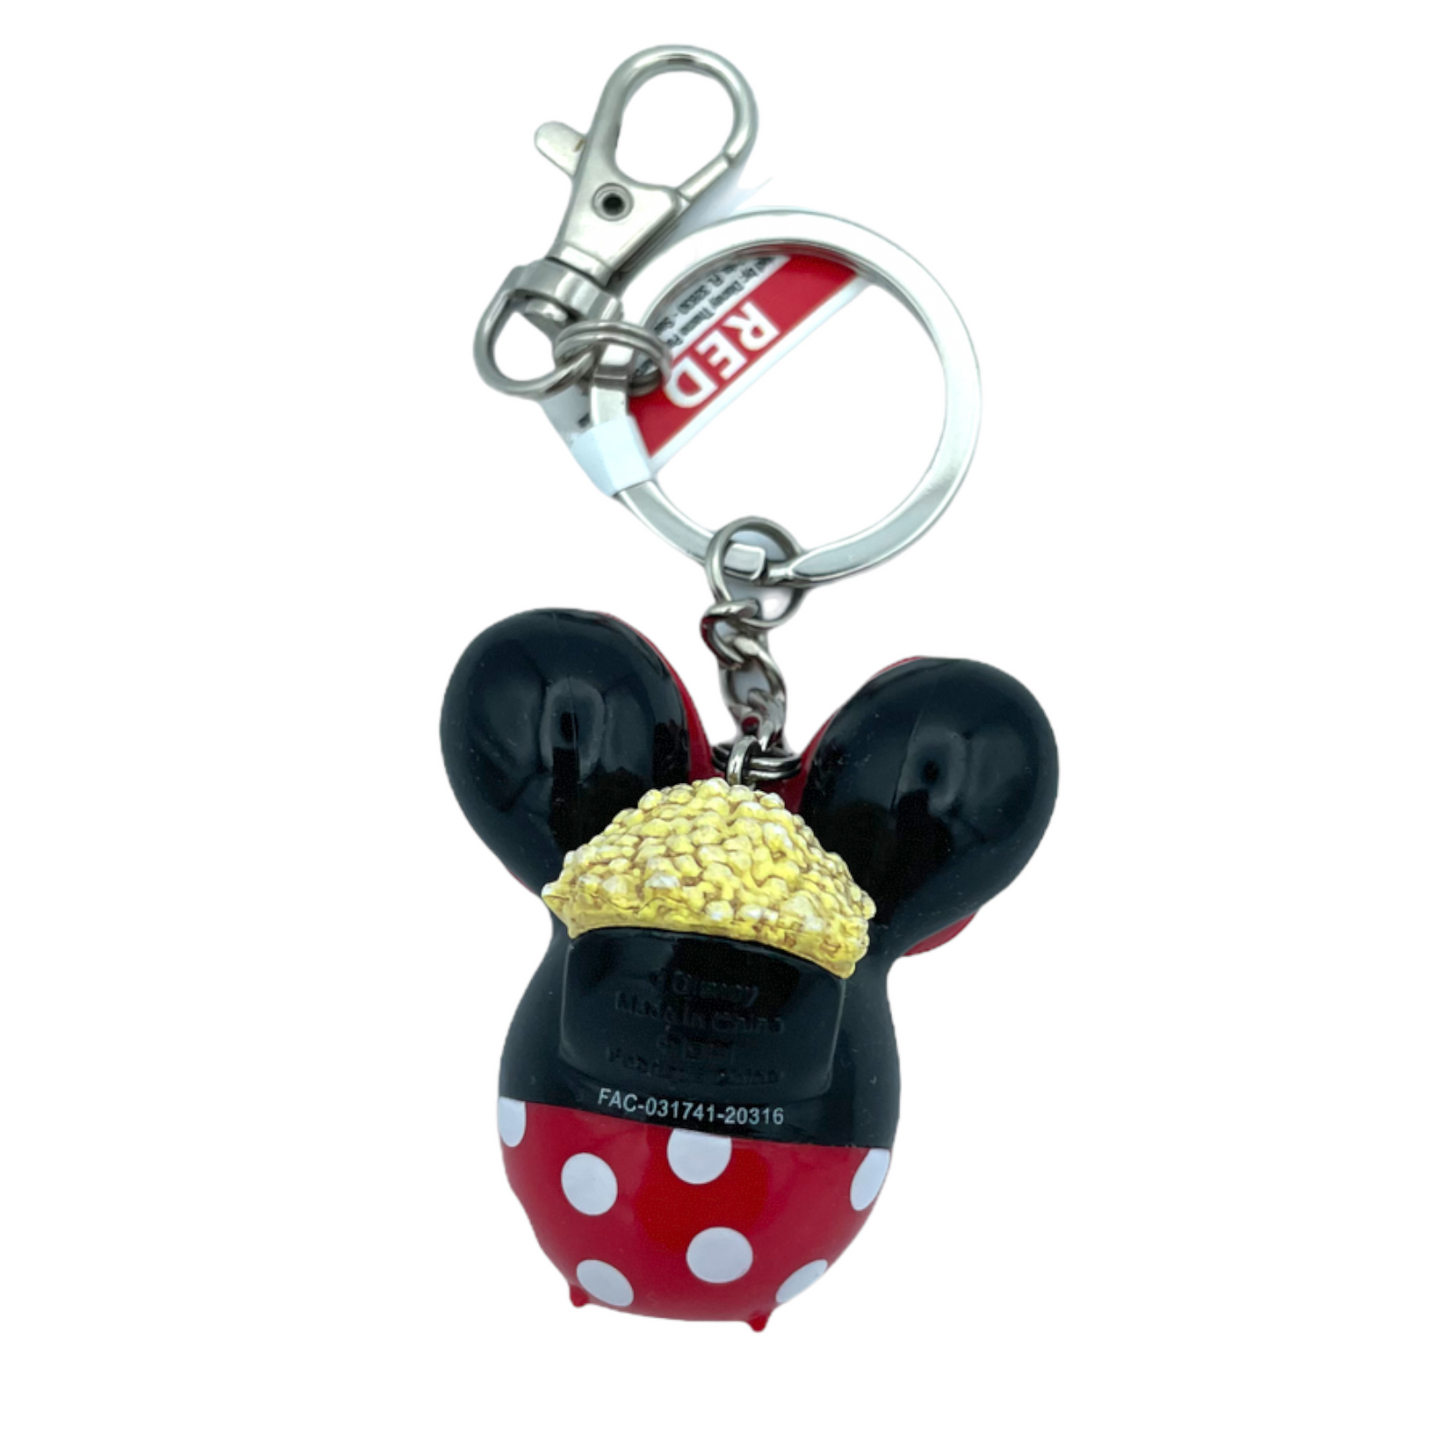 Minnie Mouse Popcorn Bucket Keychain